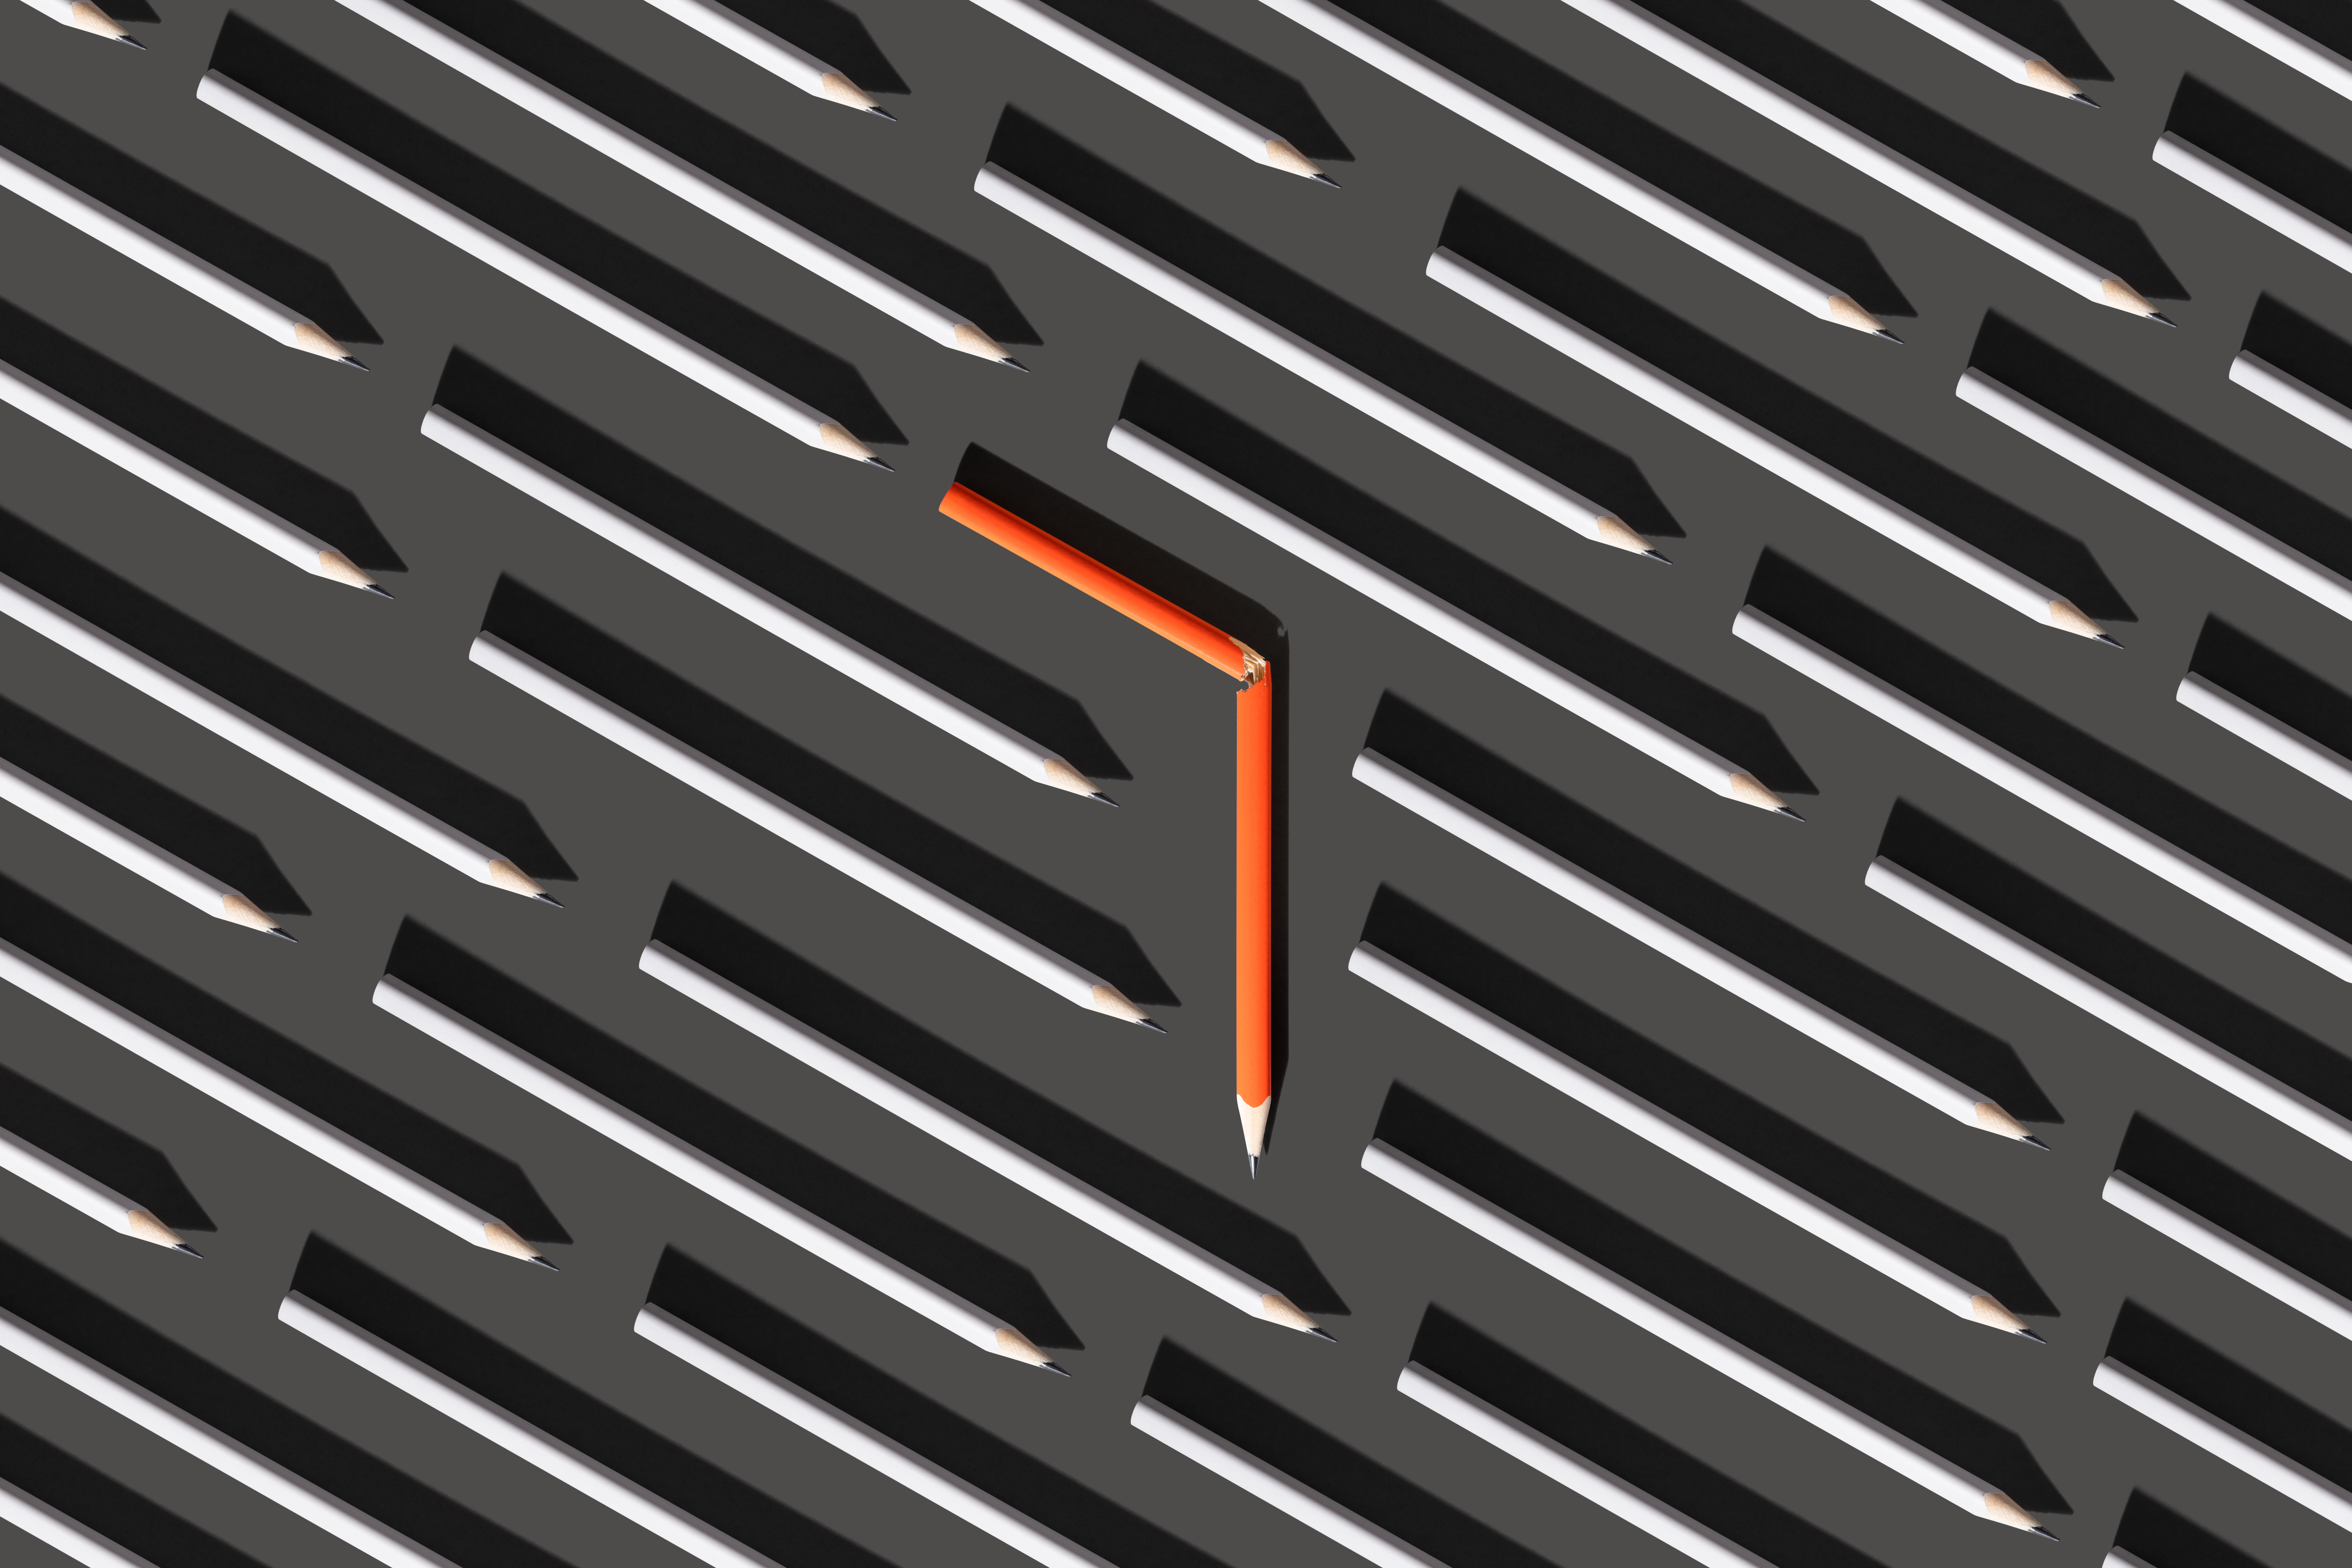 Orange pencil image between straight gray pencils to represent rotation.